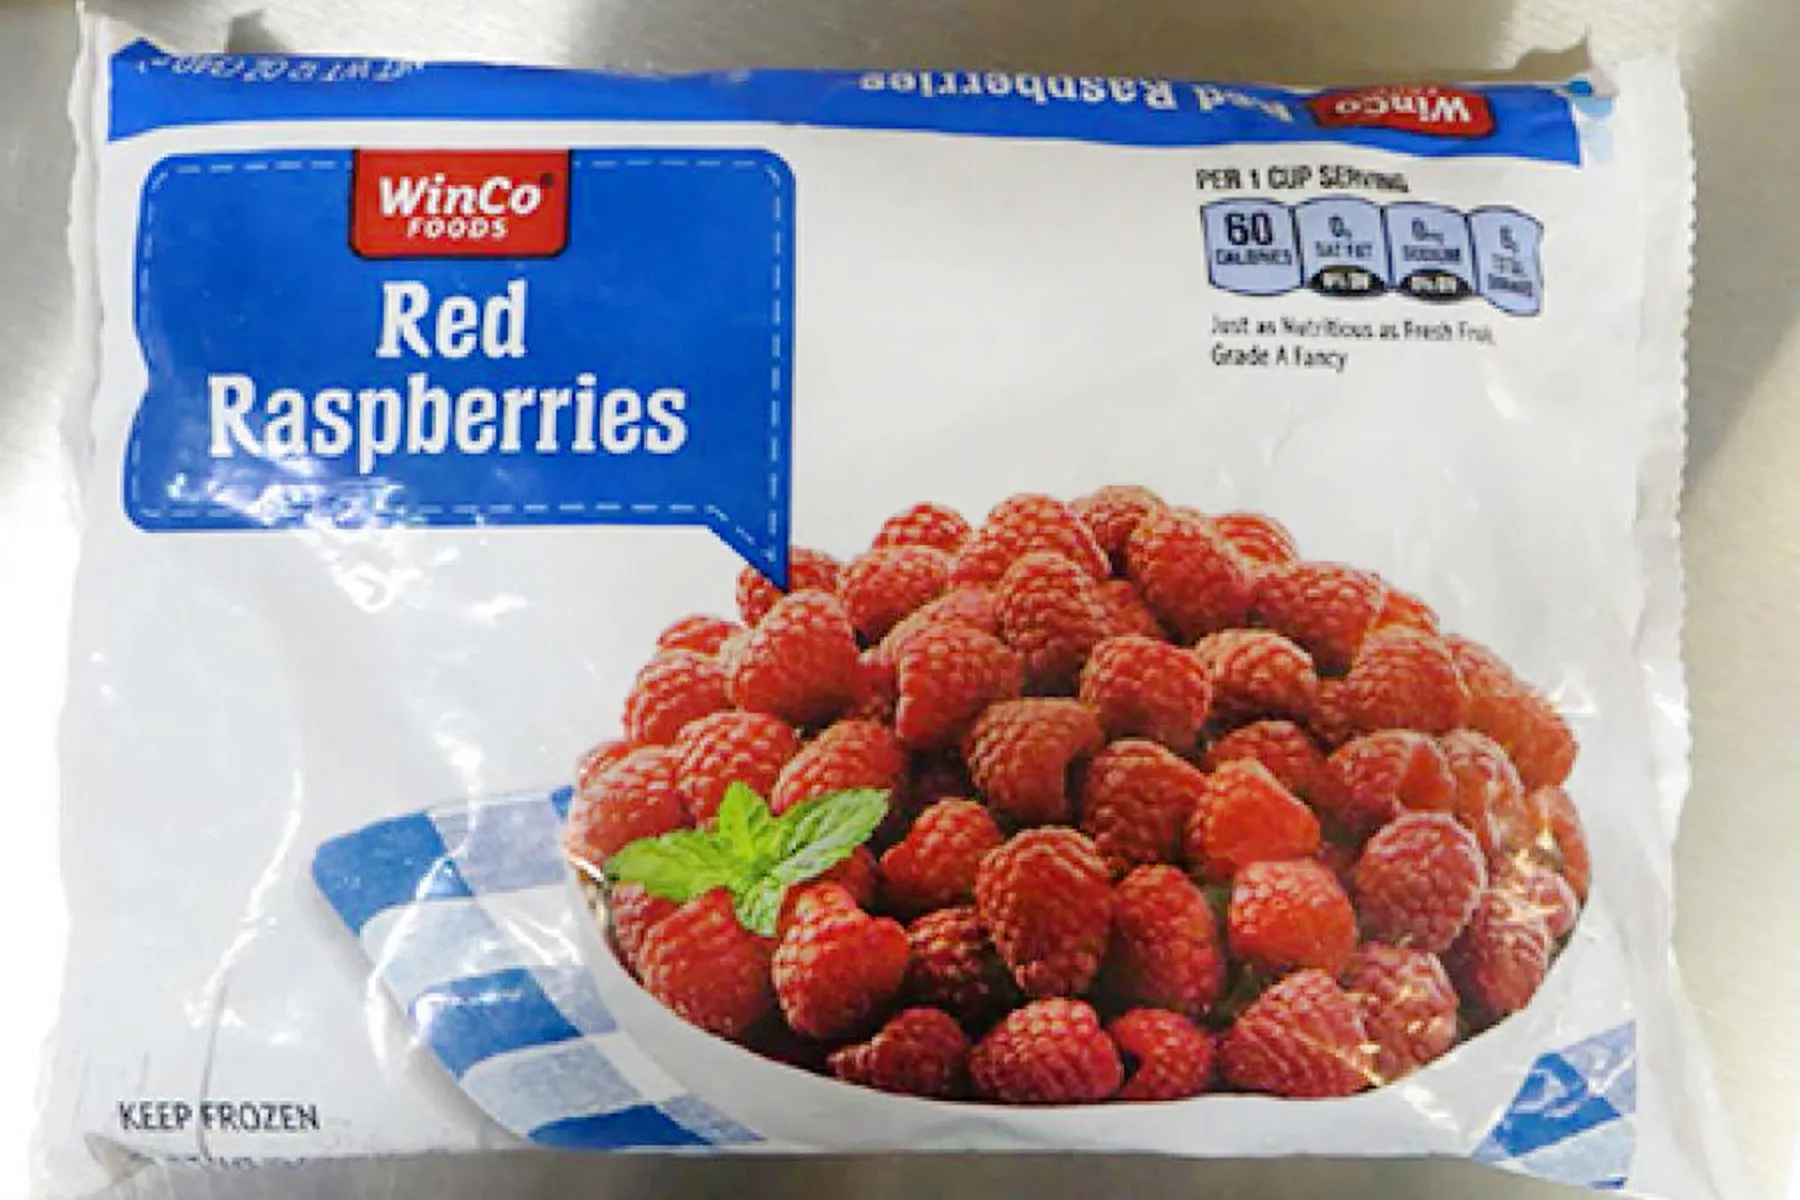 winco red raspberries recall